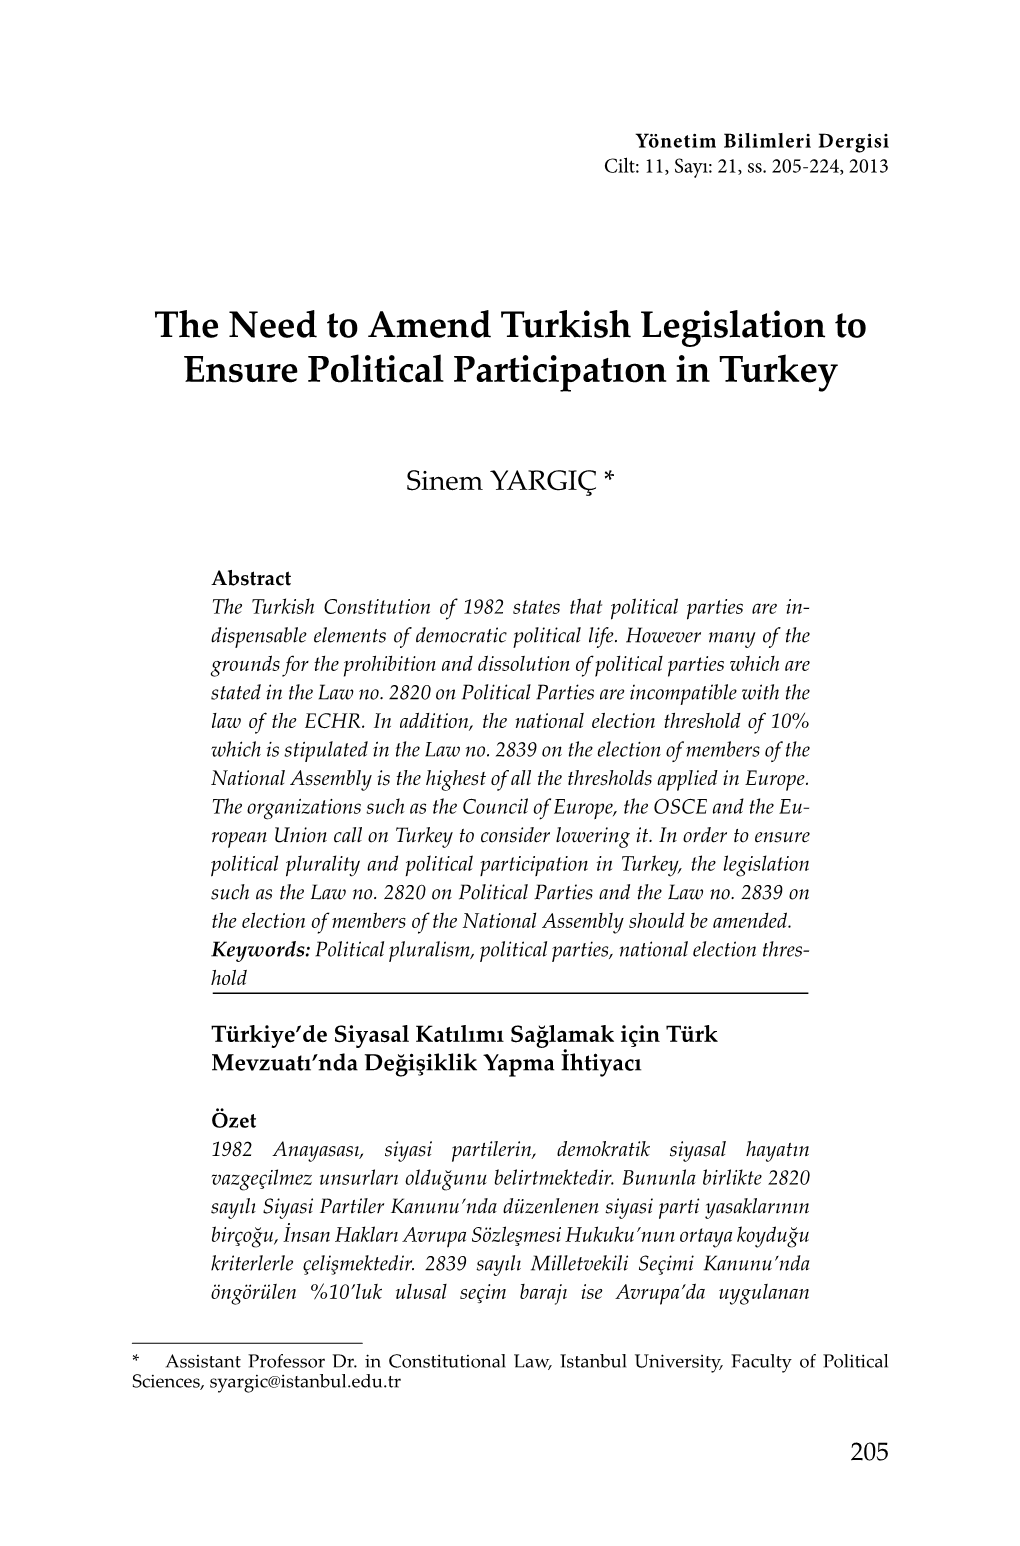 The Need to Amend Turkish Legislation to Ensure Political Participatıon in Turkey